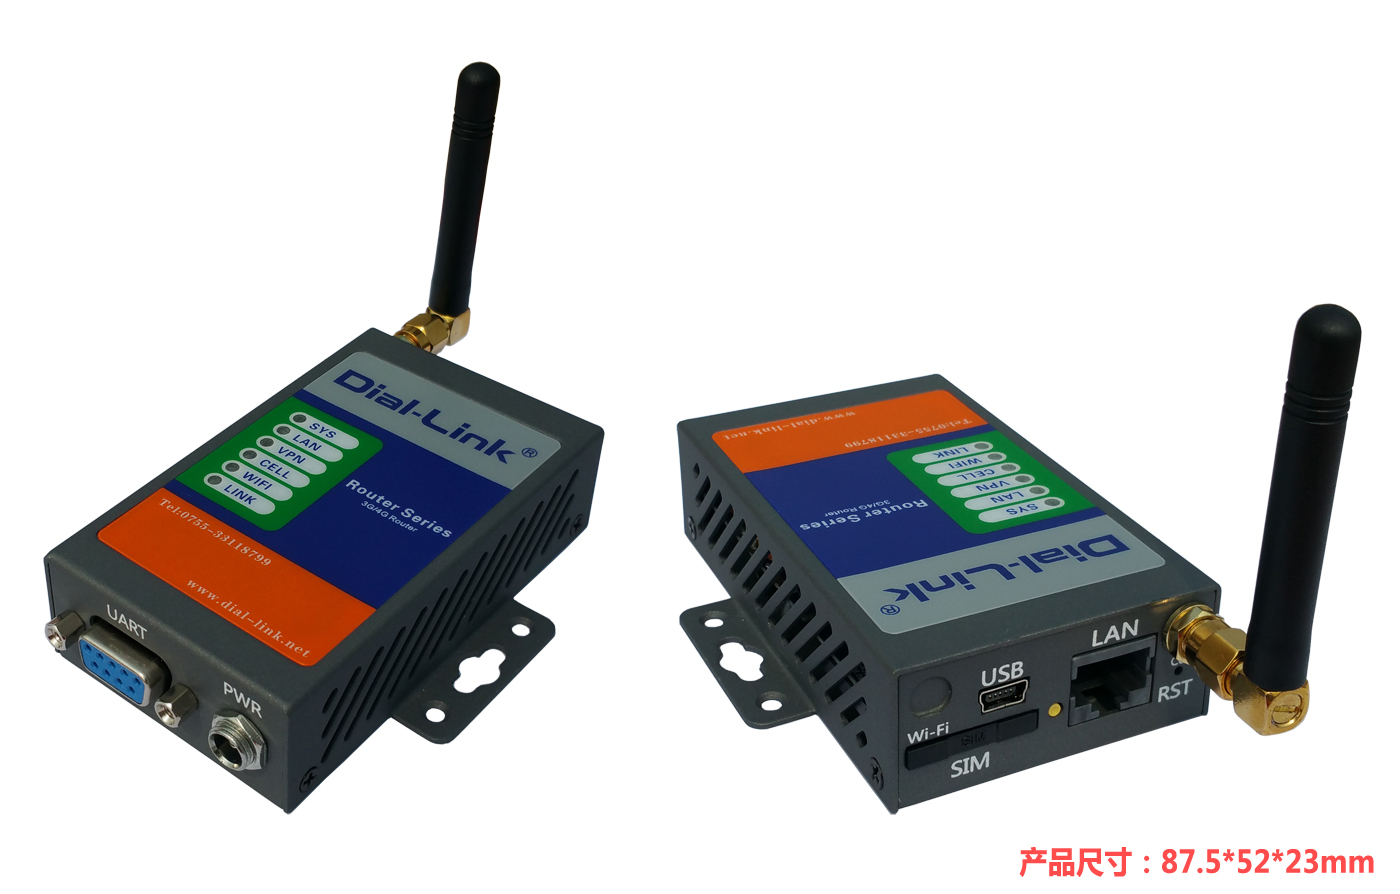 DLK-R890 工业级TD-LTE路由器 工业LTE路由器 工业级4G路由器